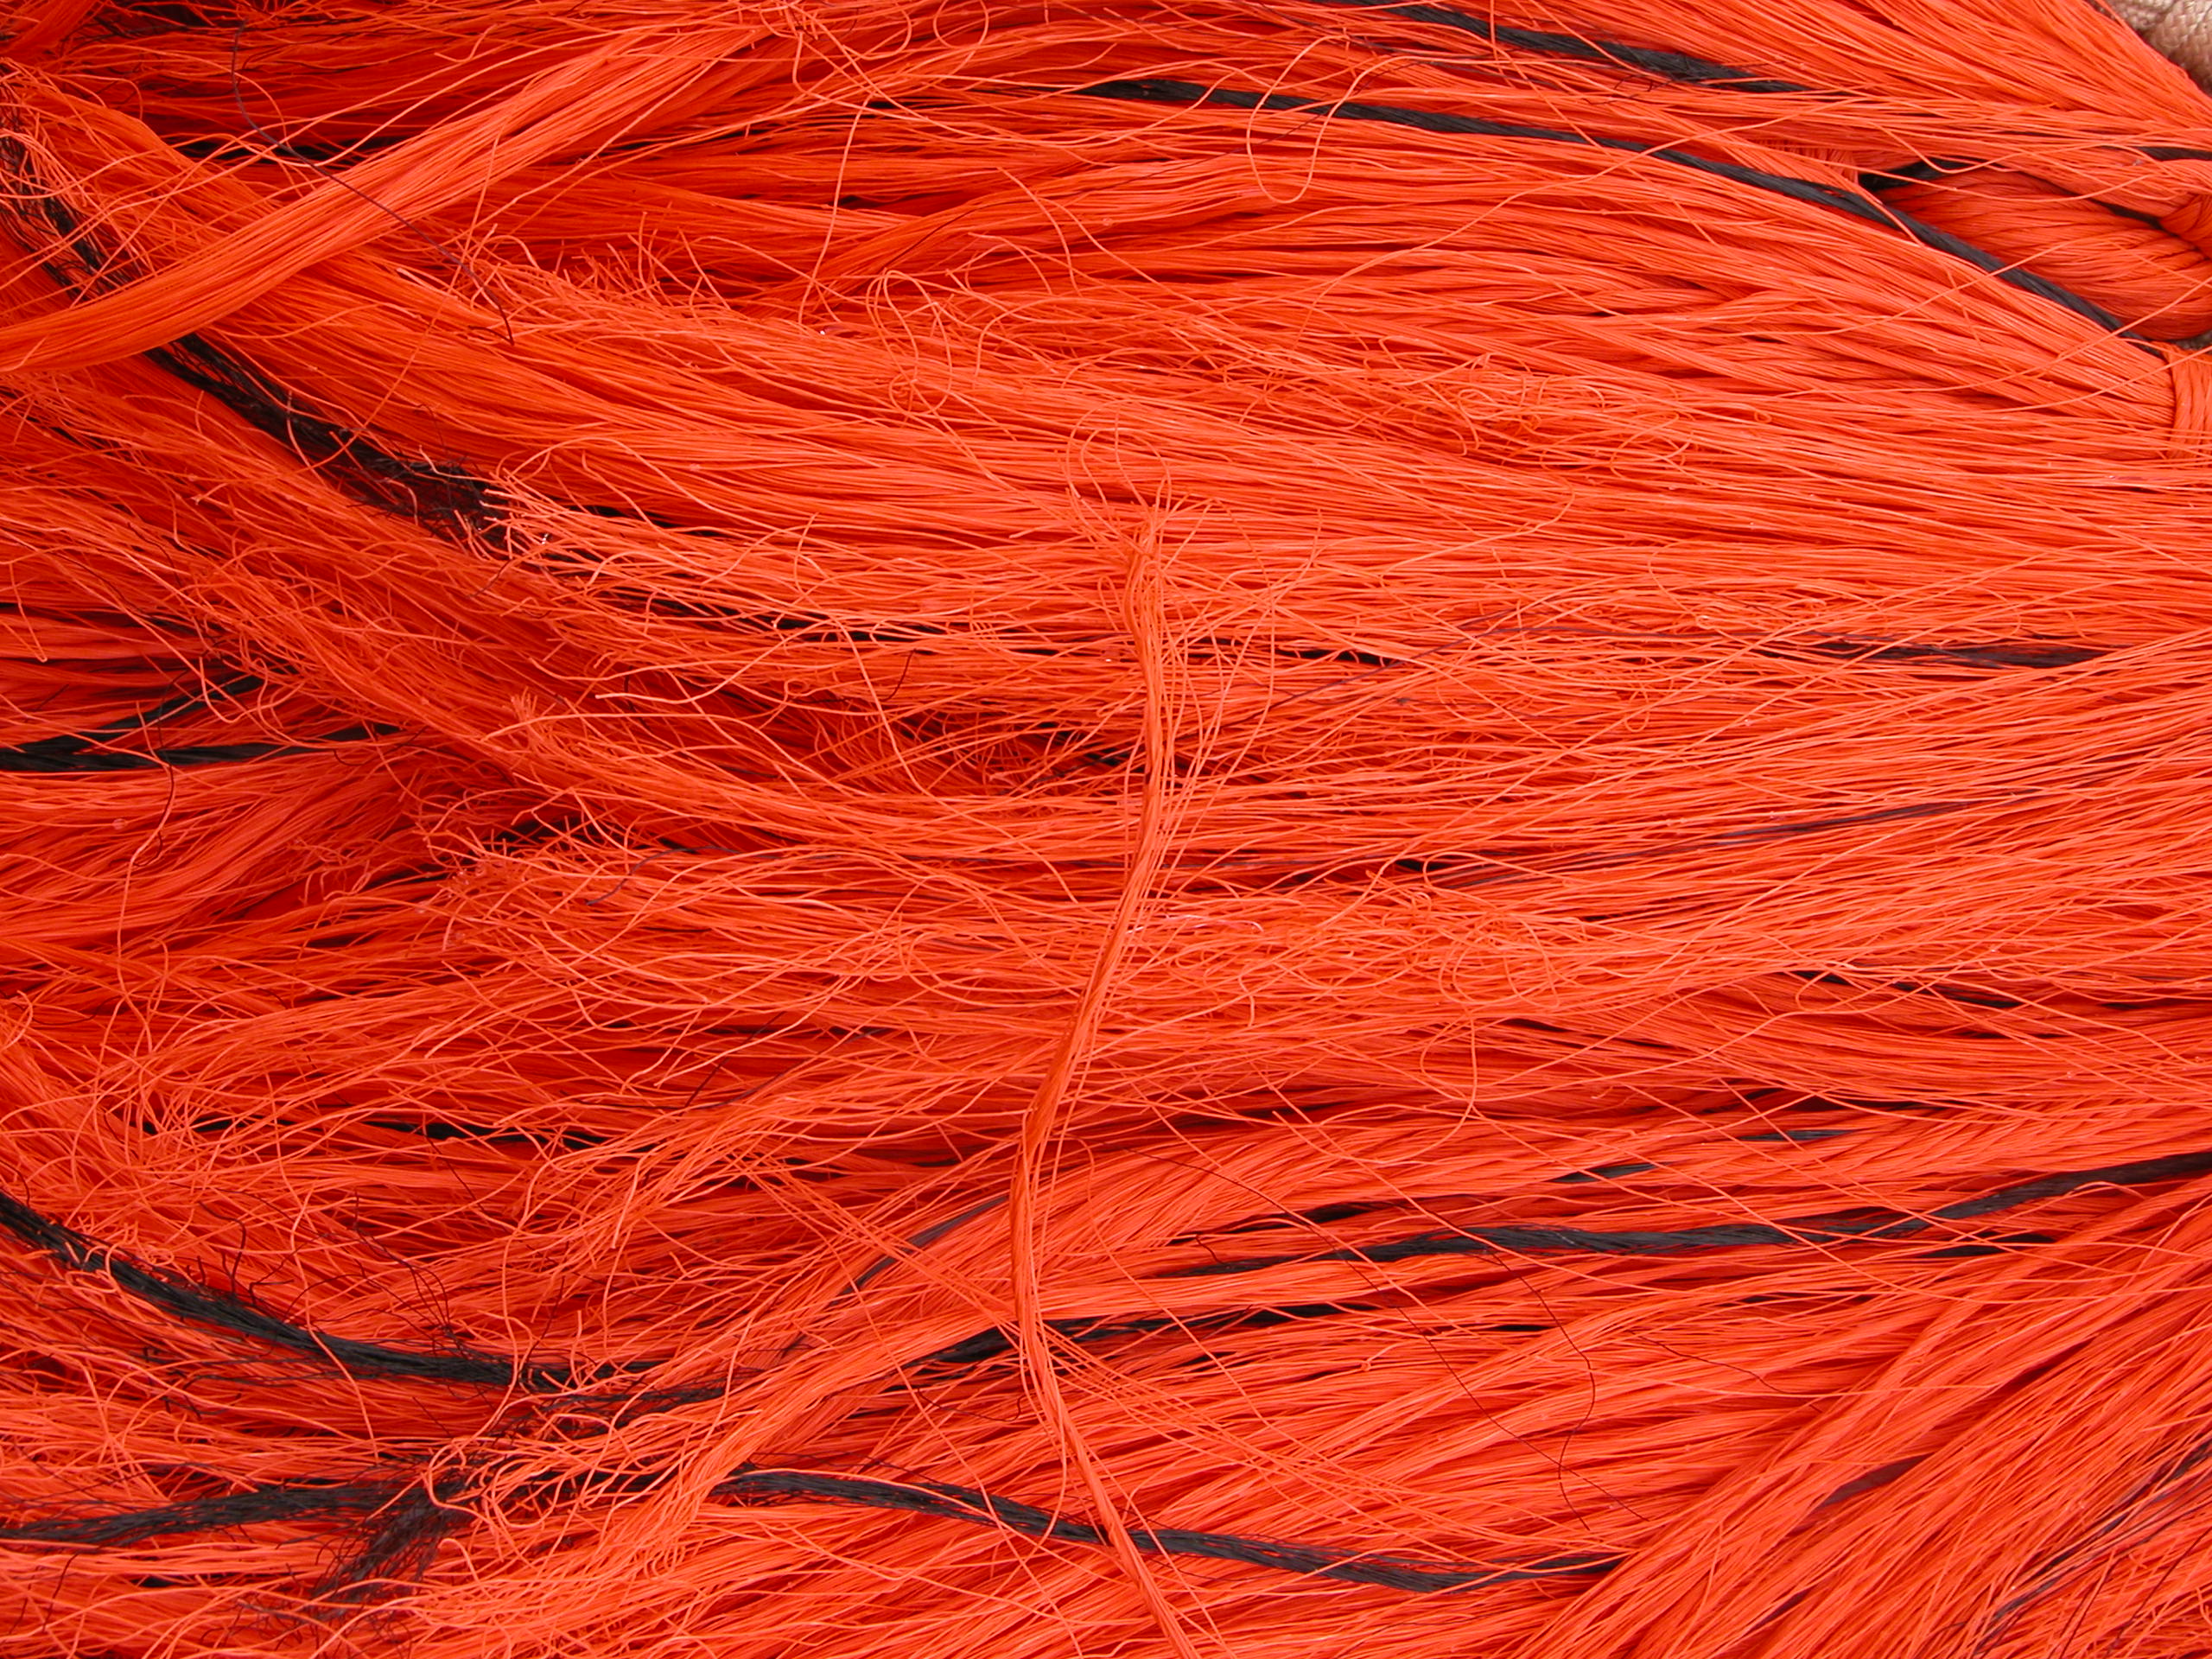 Image*After : photo : fabrics fibers string strings plastic texture orange